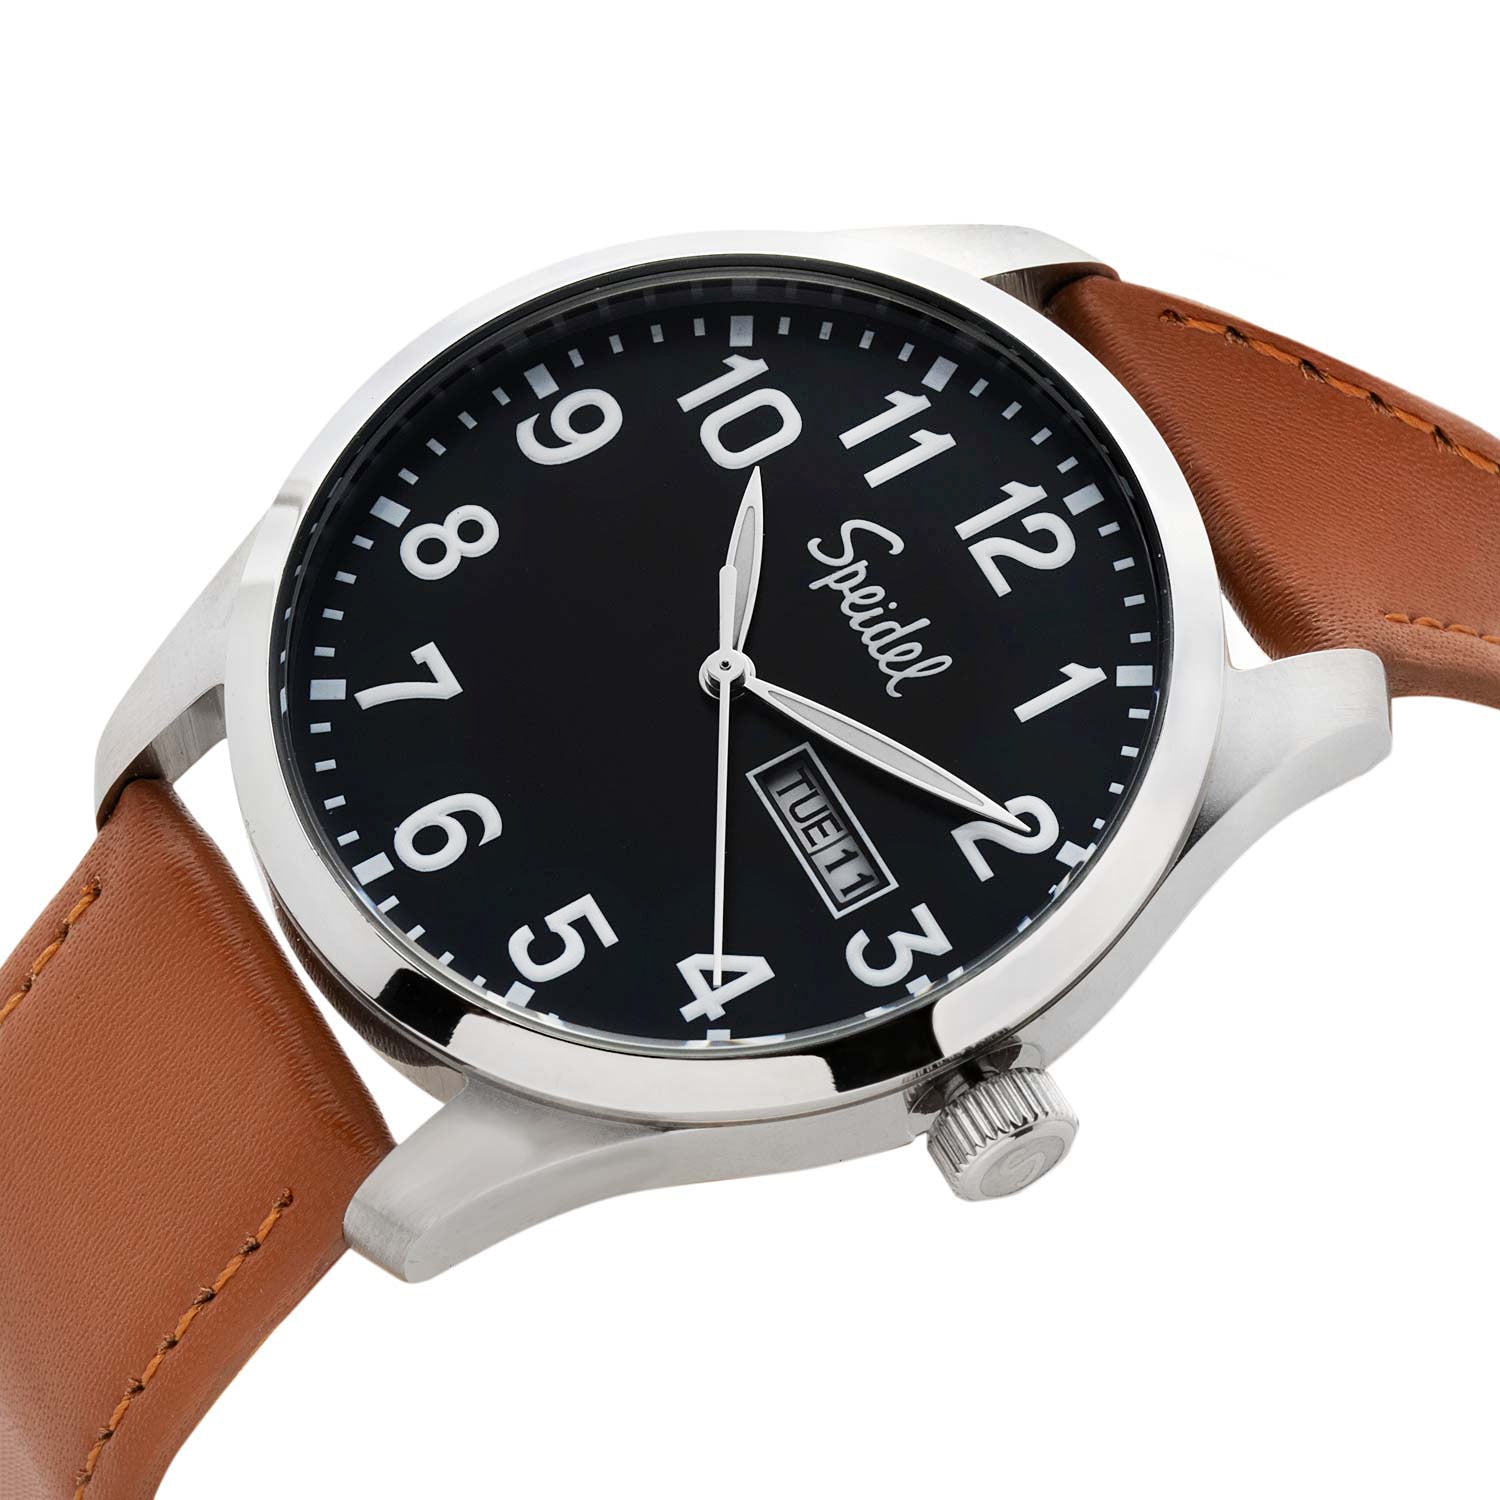 New vintage old stock Speidel watch silver black leather band #60331900  unisex | eBay